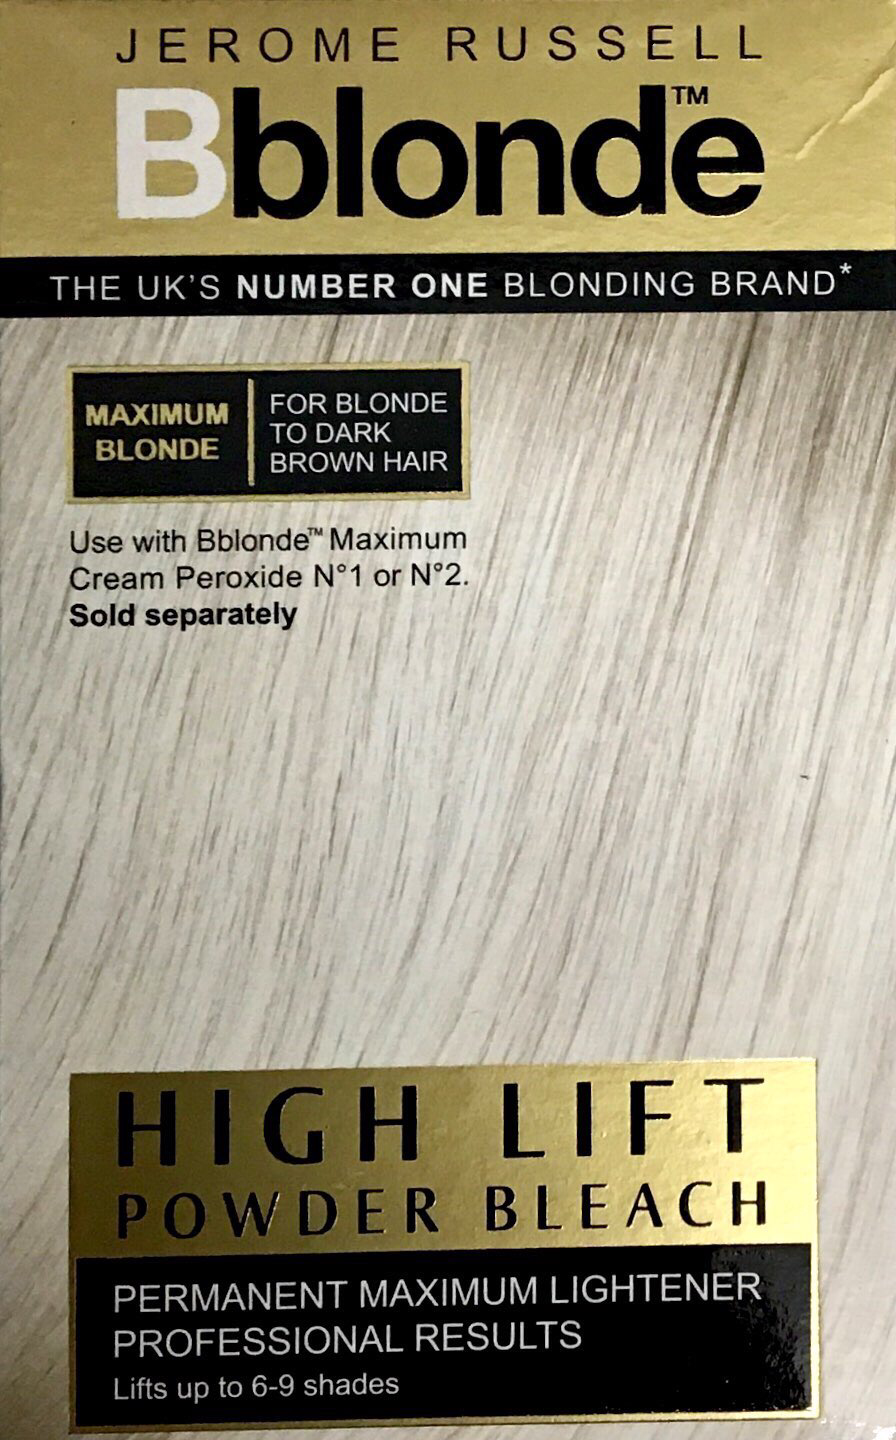 JR Bblonde High lift Powder Bleach - Blonde to dark brown hair